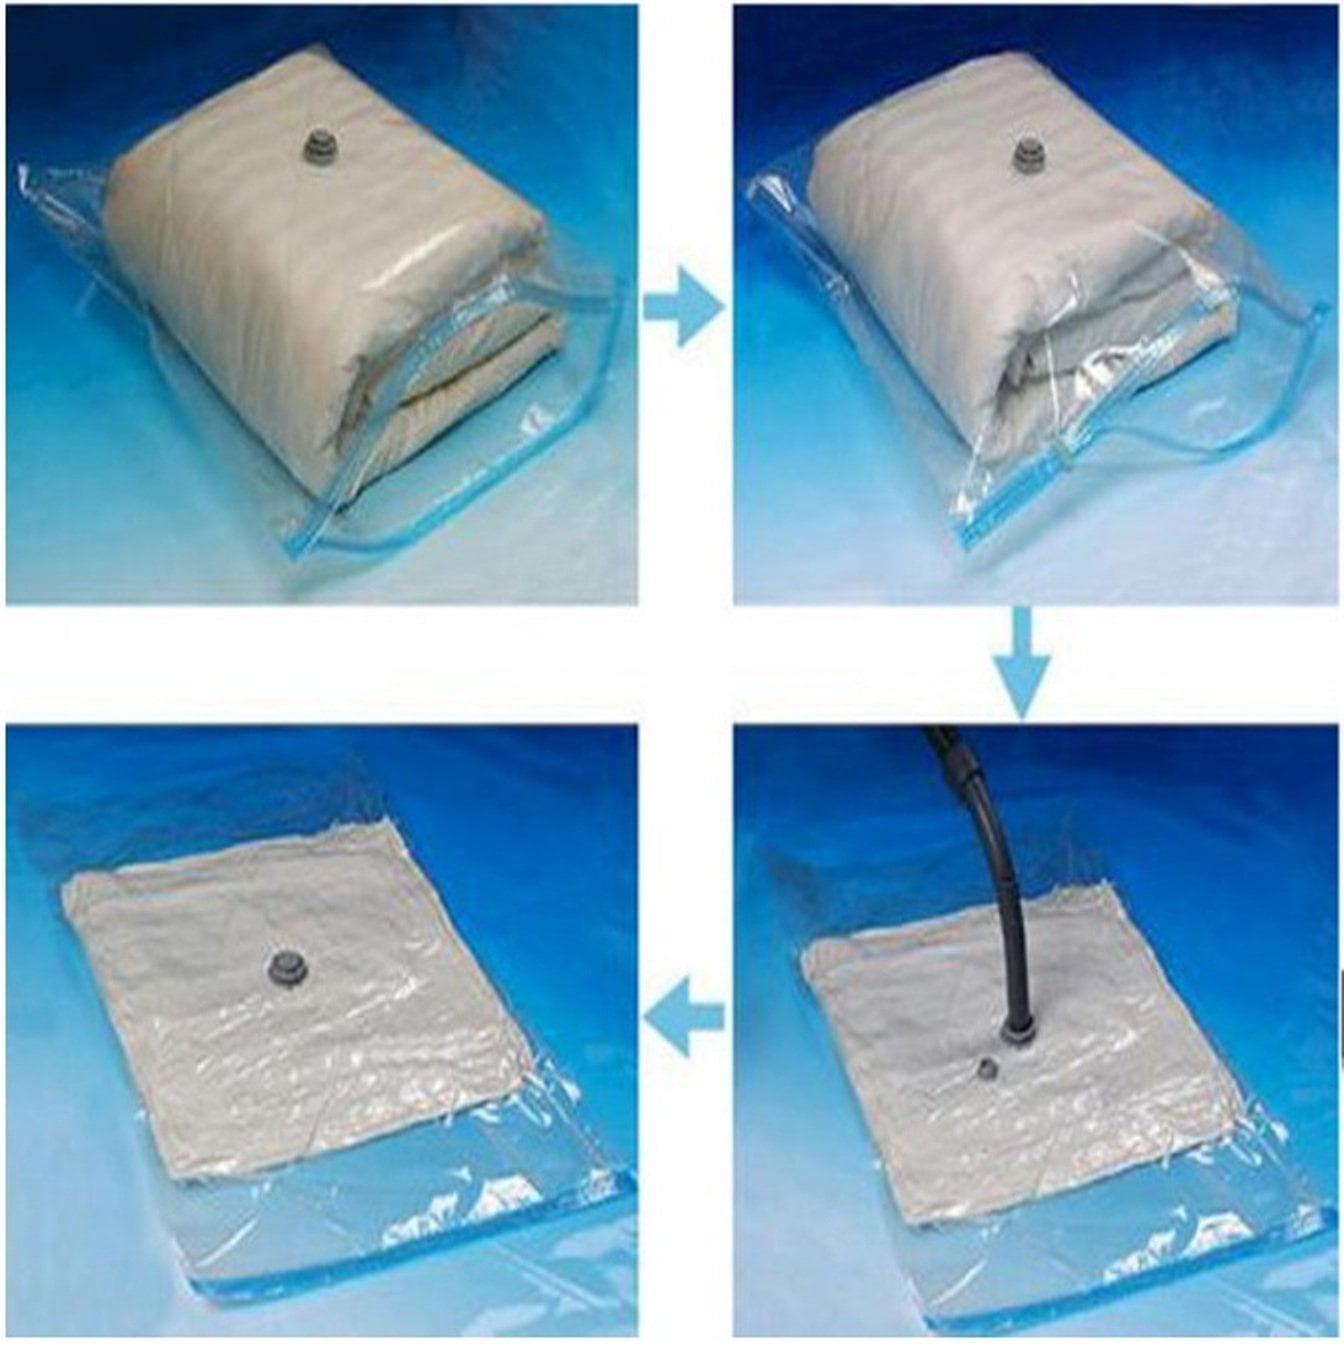 Vacwel 10-Pack Jumbo Vacuum Seal Bags for Clothing Storage - Space